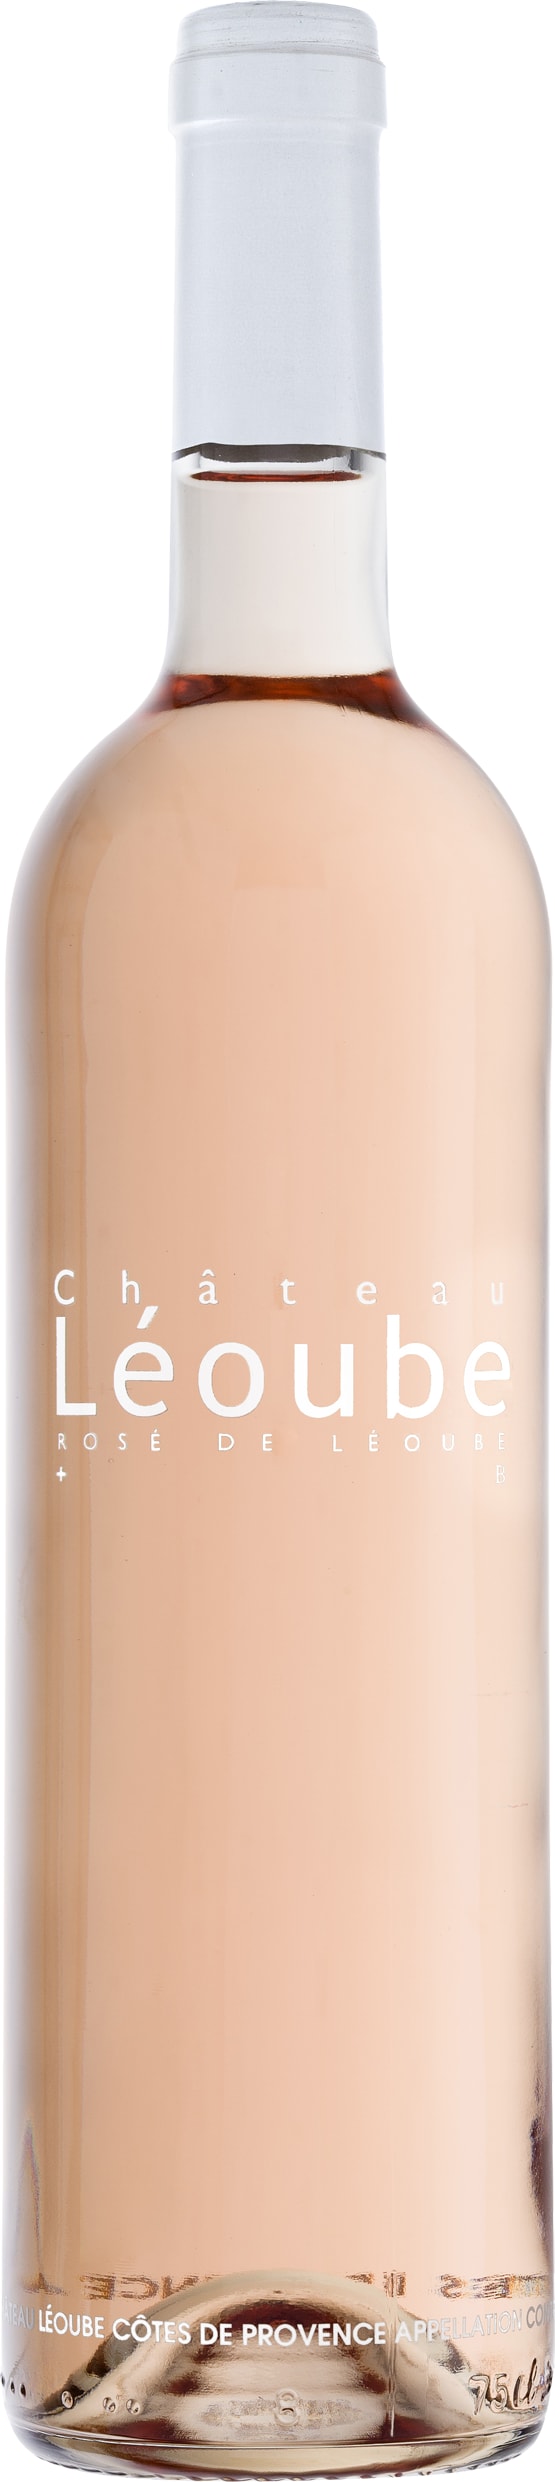 Chateau Leoube Rose de Leoube Organic 2022 75cl - Buy Chateau Leoube Wines from GREAT WINES DIRECT wine shop